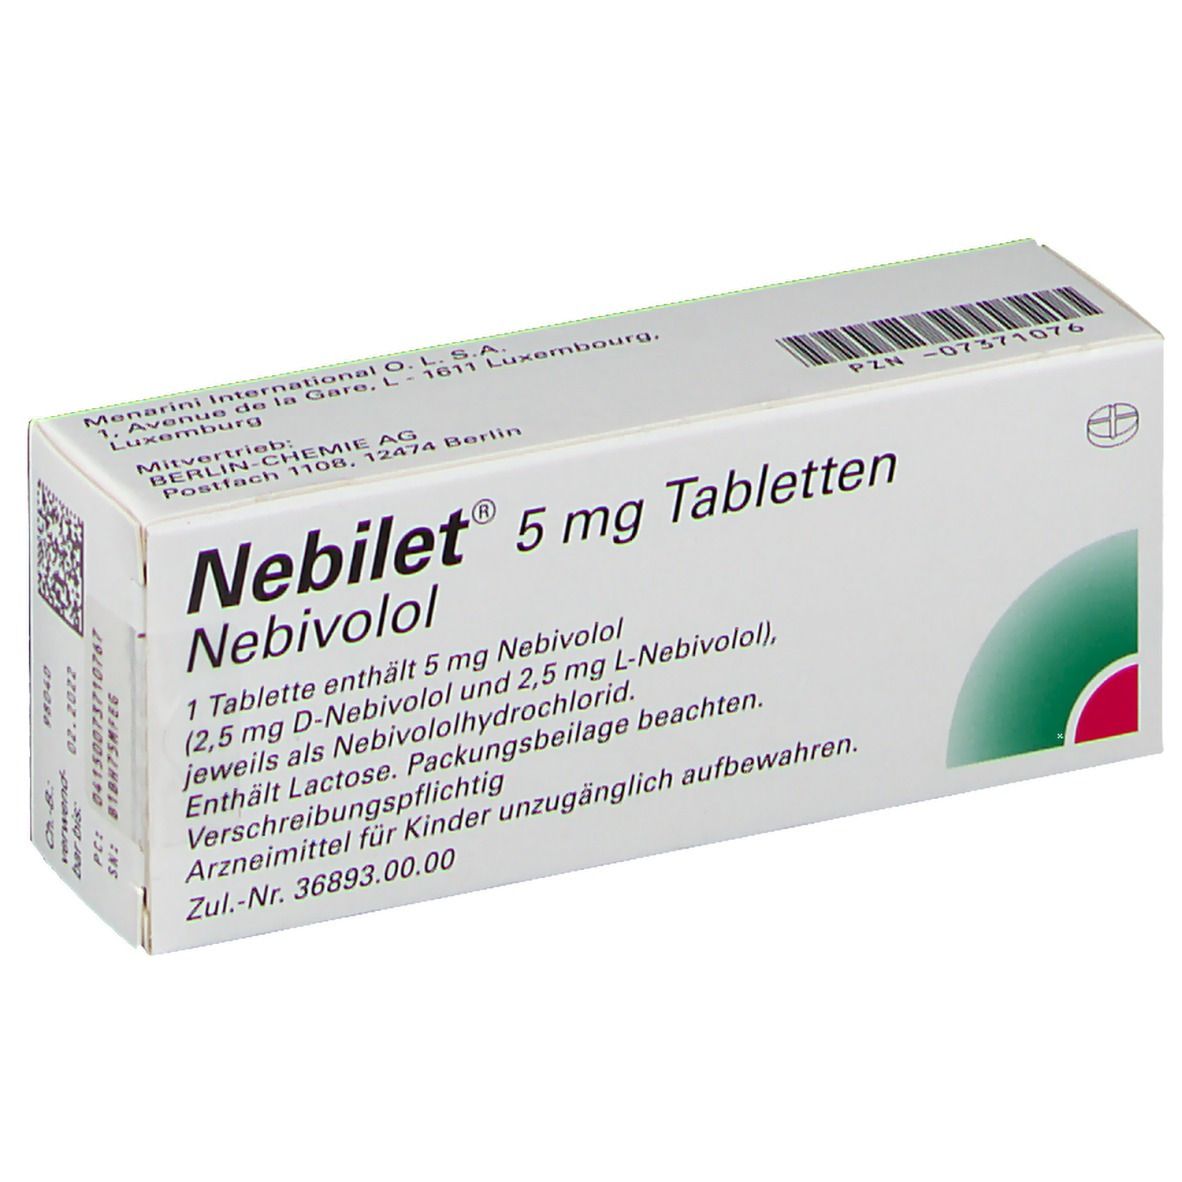 Nebilet® 5 mg